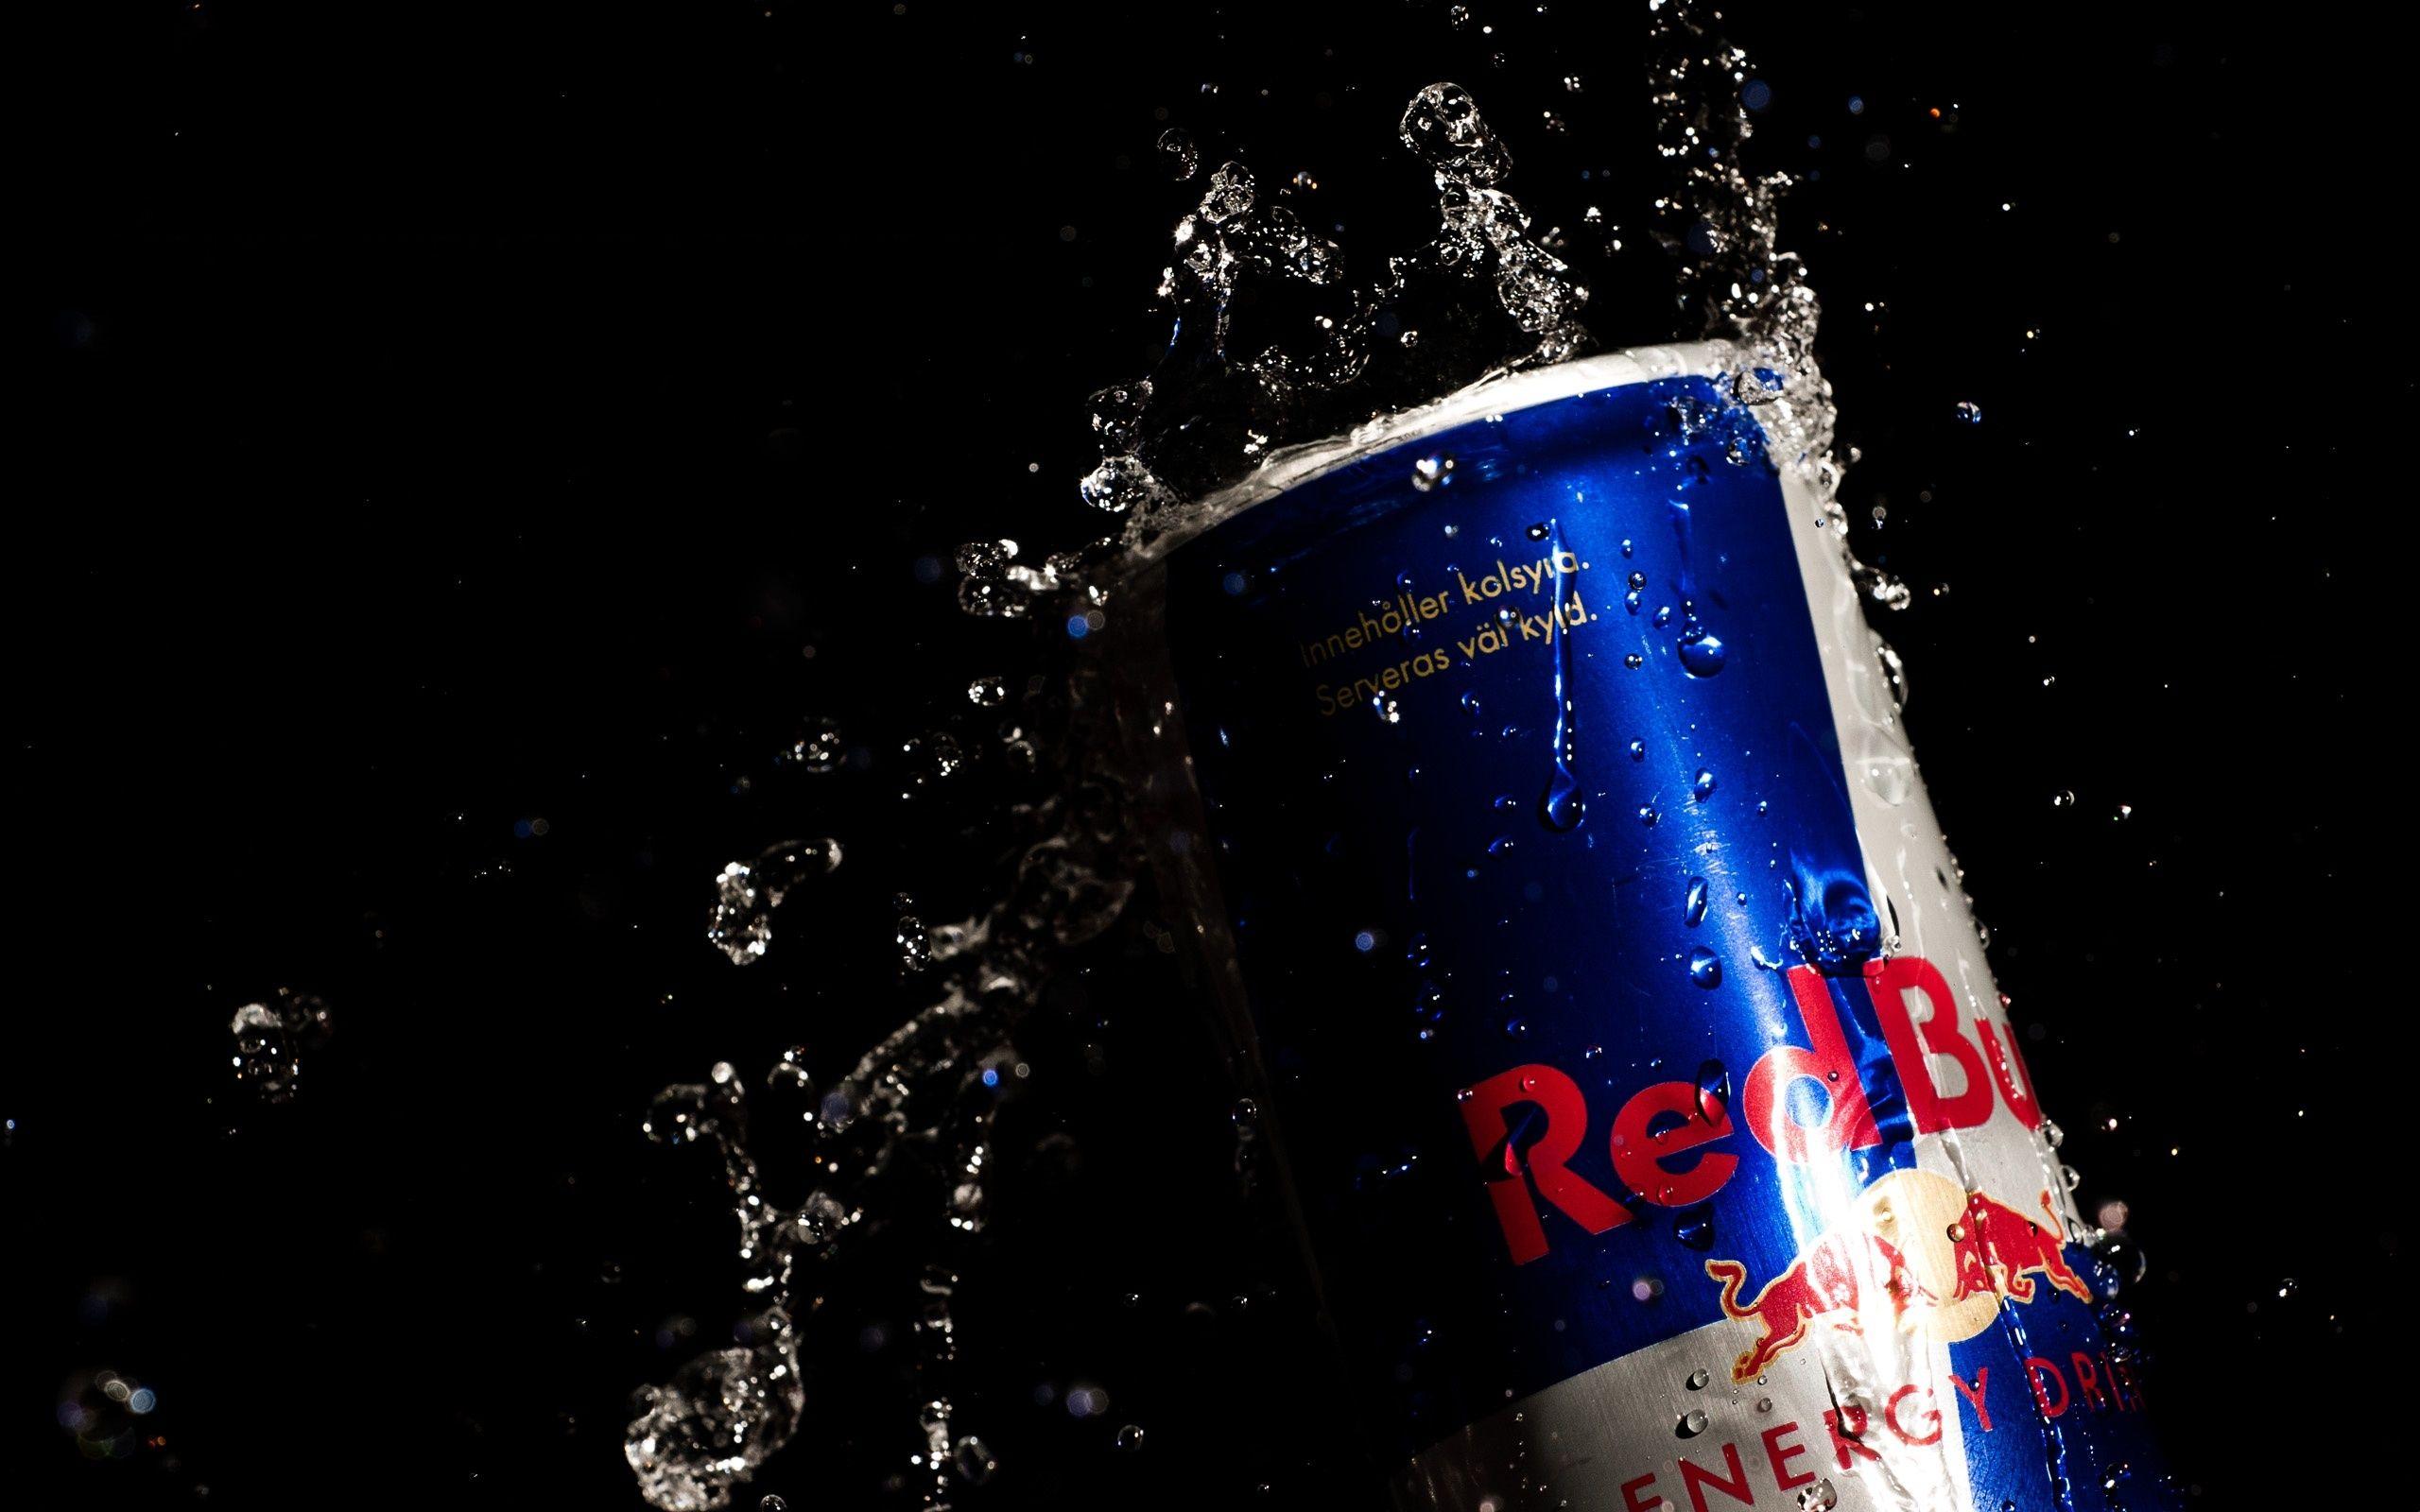 Red Bull Marketing by Cole Swain on Prezi